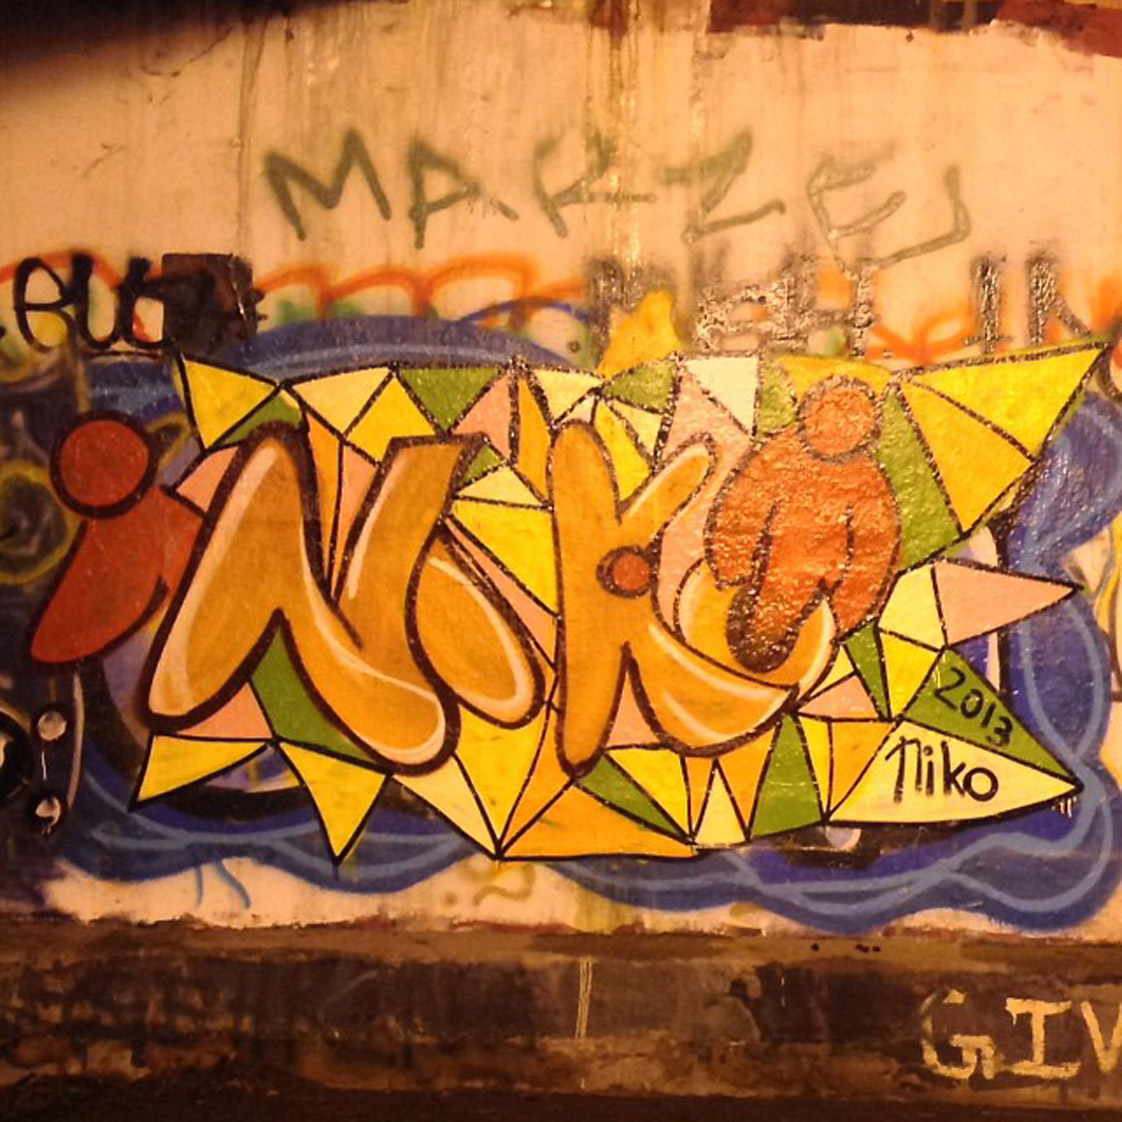 Local Graffiti Artist Niko S Take On The Art The Durham Voice